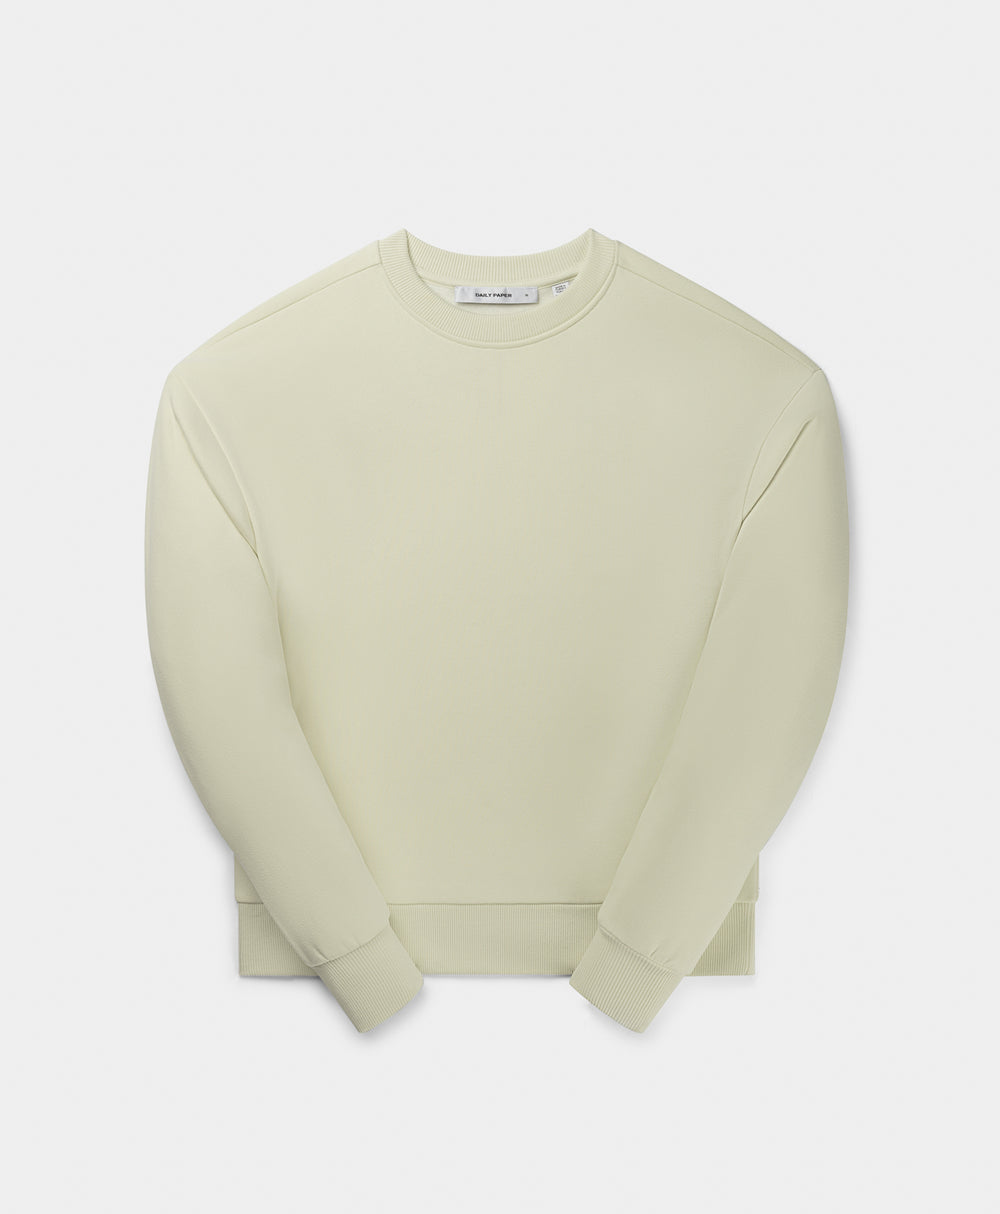 DP - Frost White Ragla Sweater - Packshot - Front